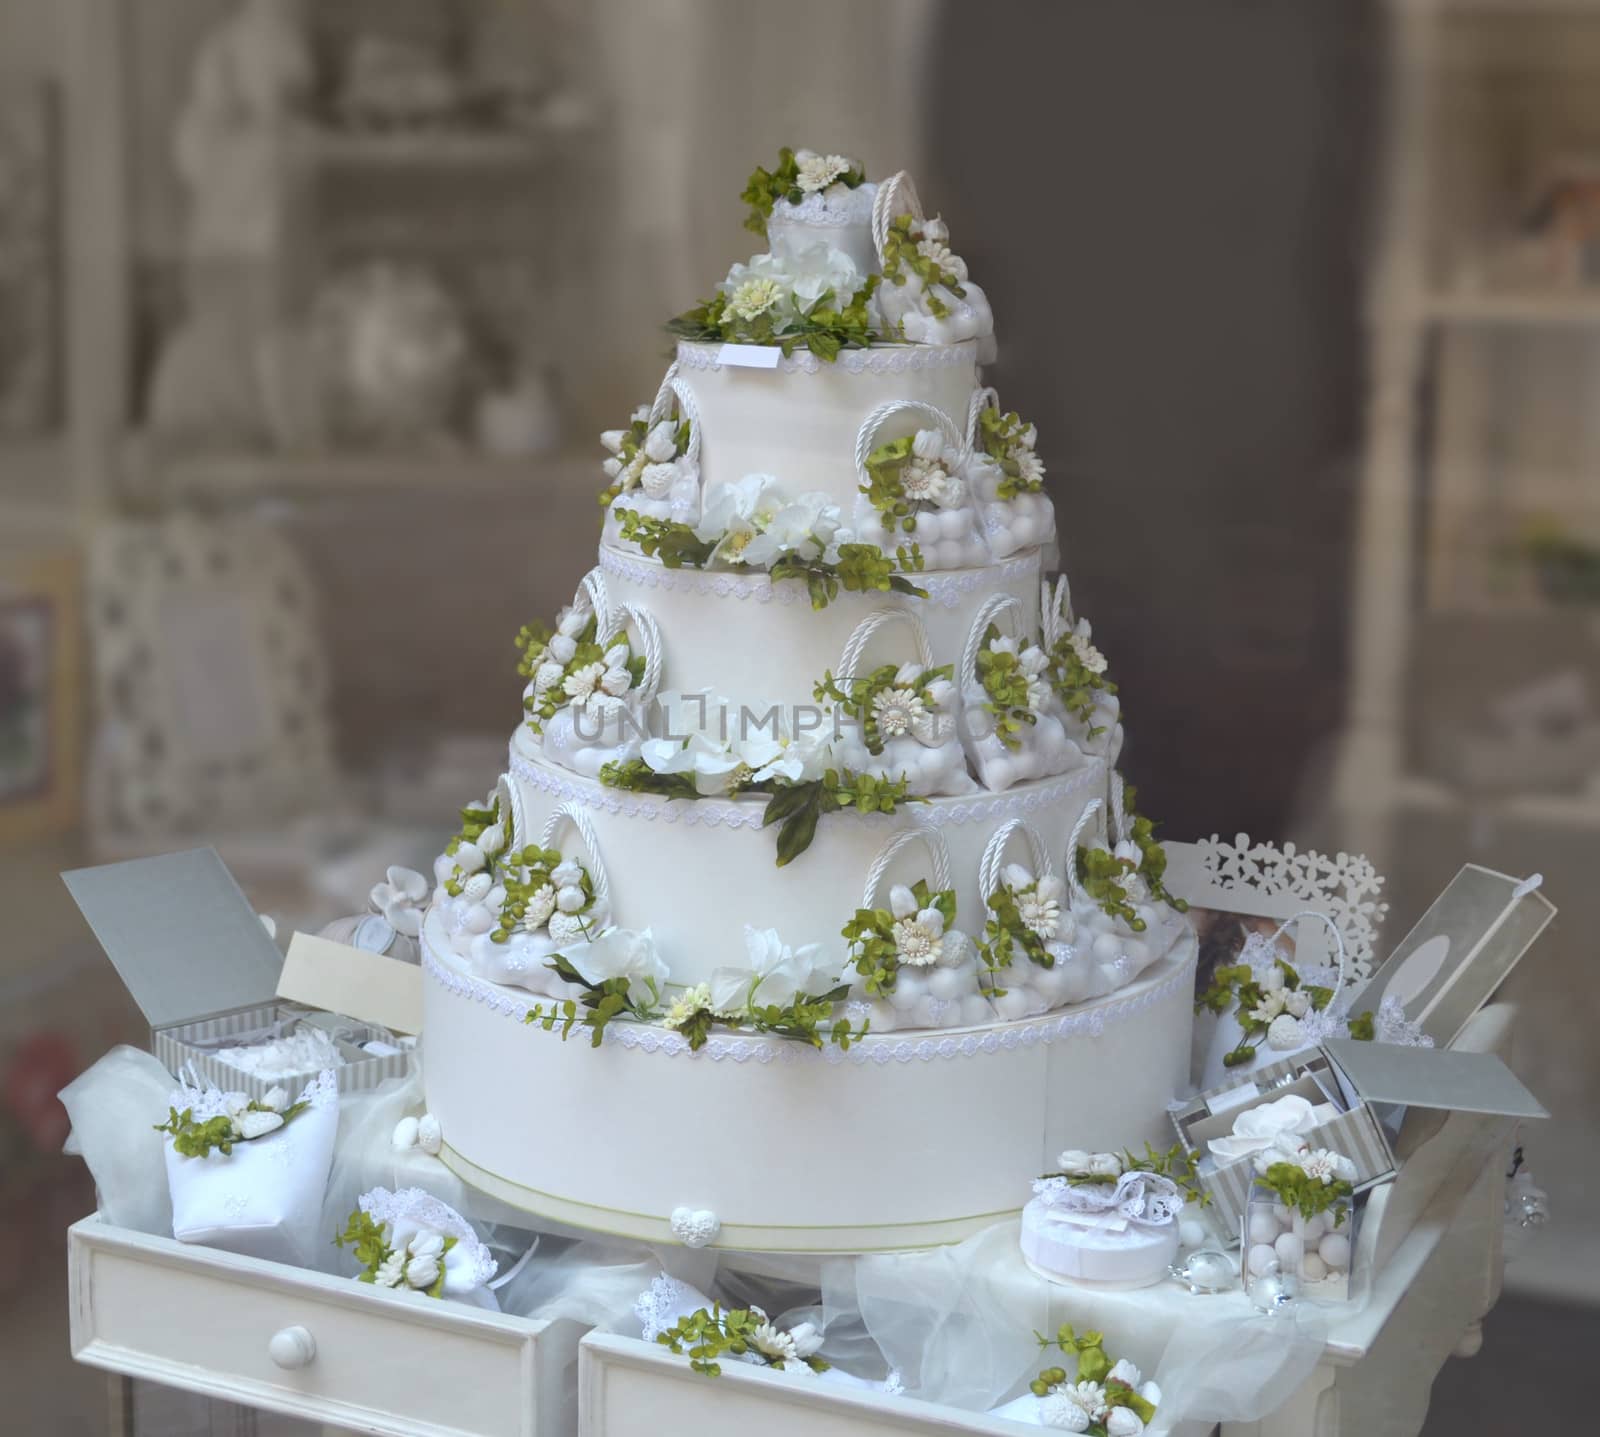 White and green wedding cake by artofphoto